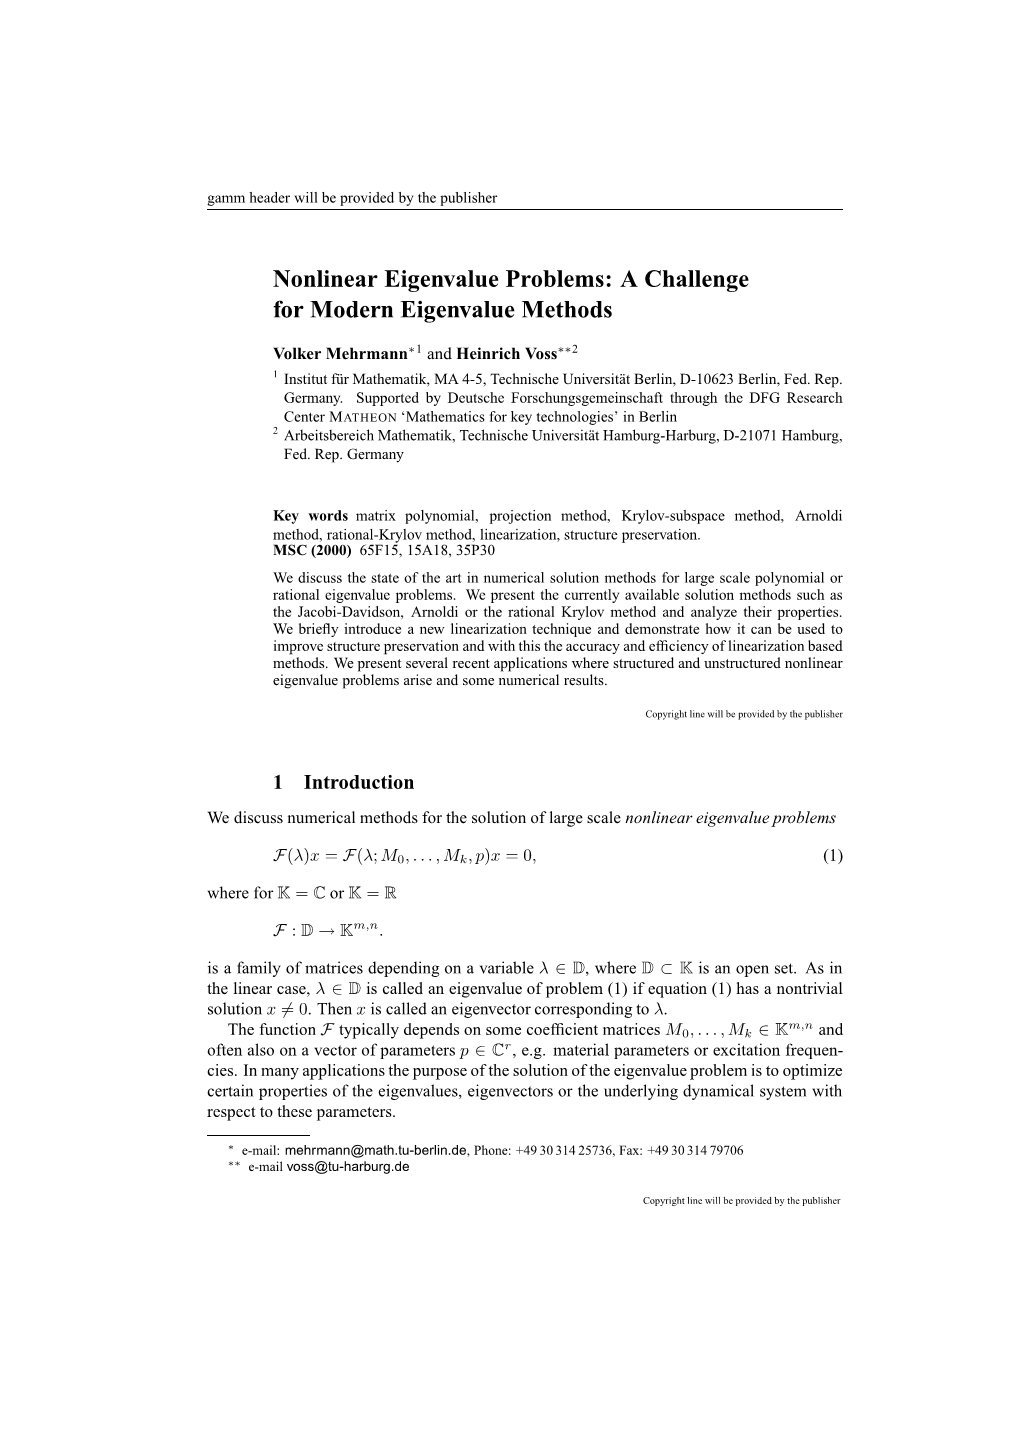 Nonlinear Eigenvalue Problems: a Challenge for Modern Eigenvalue Methods